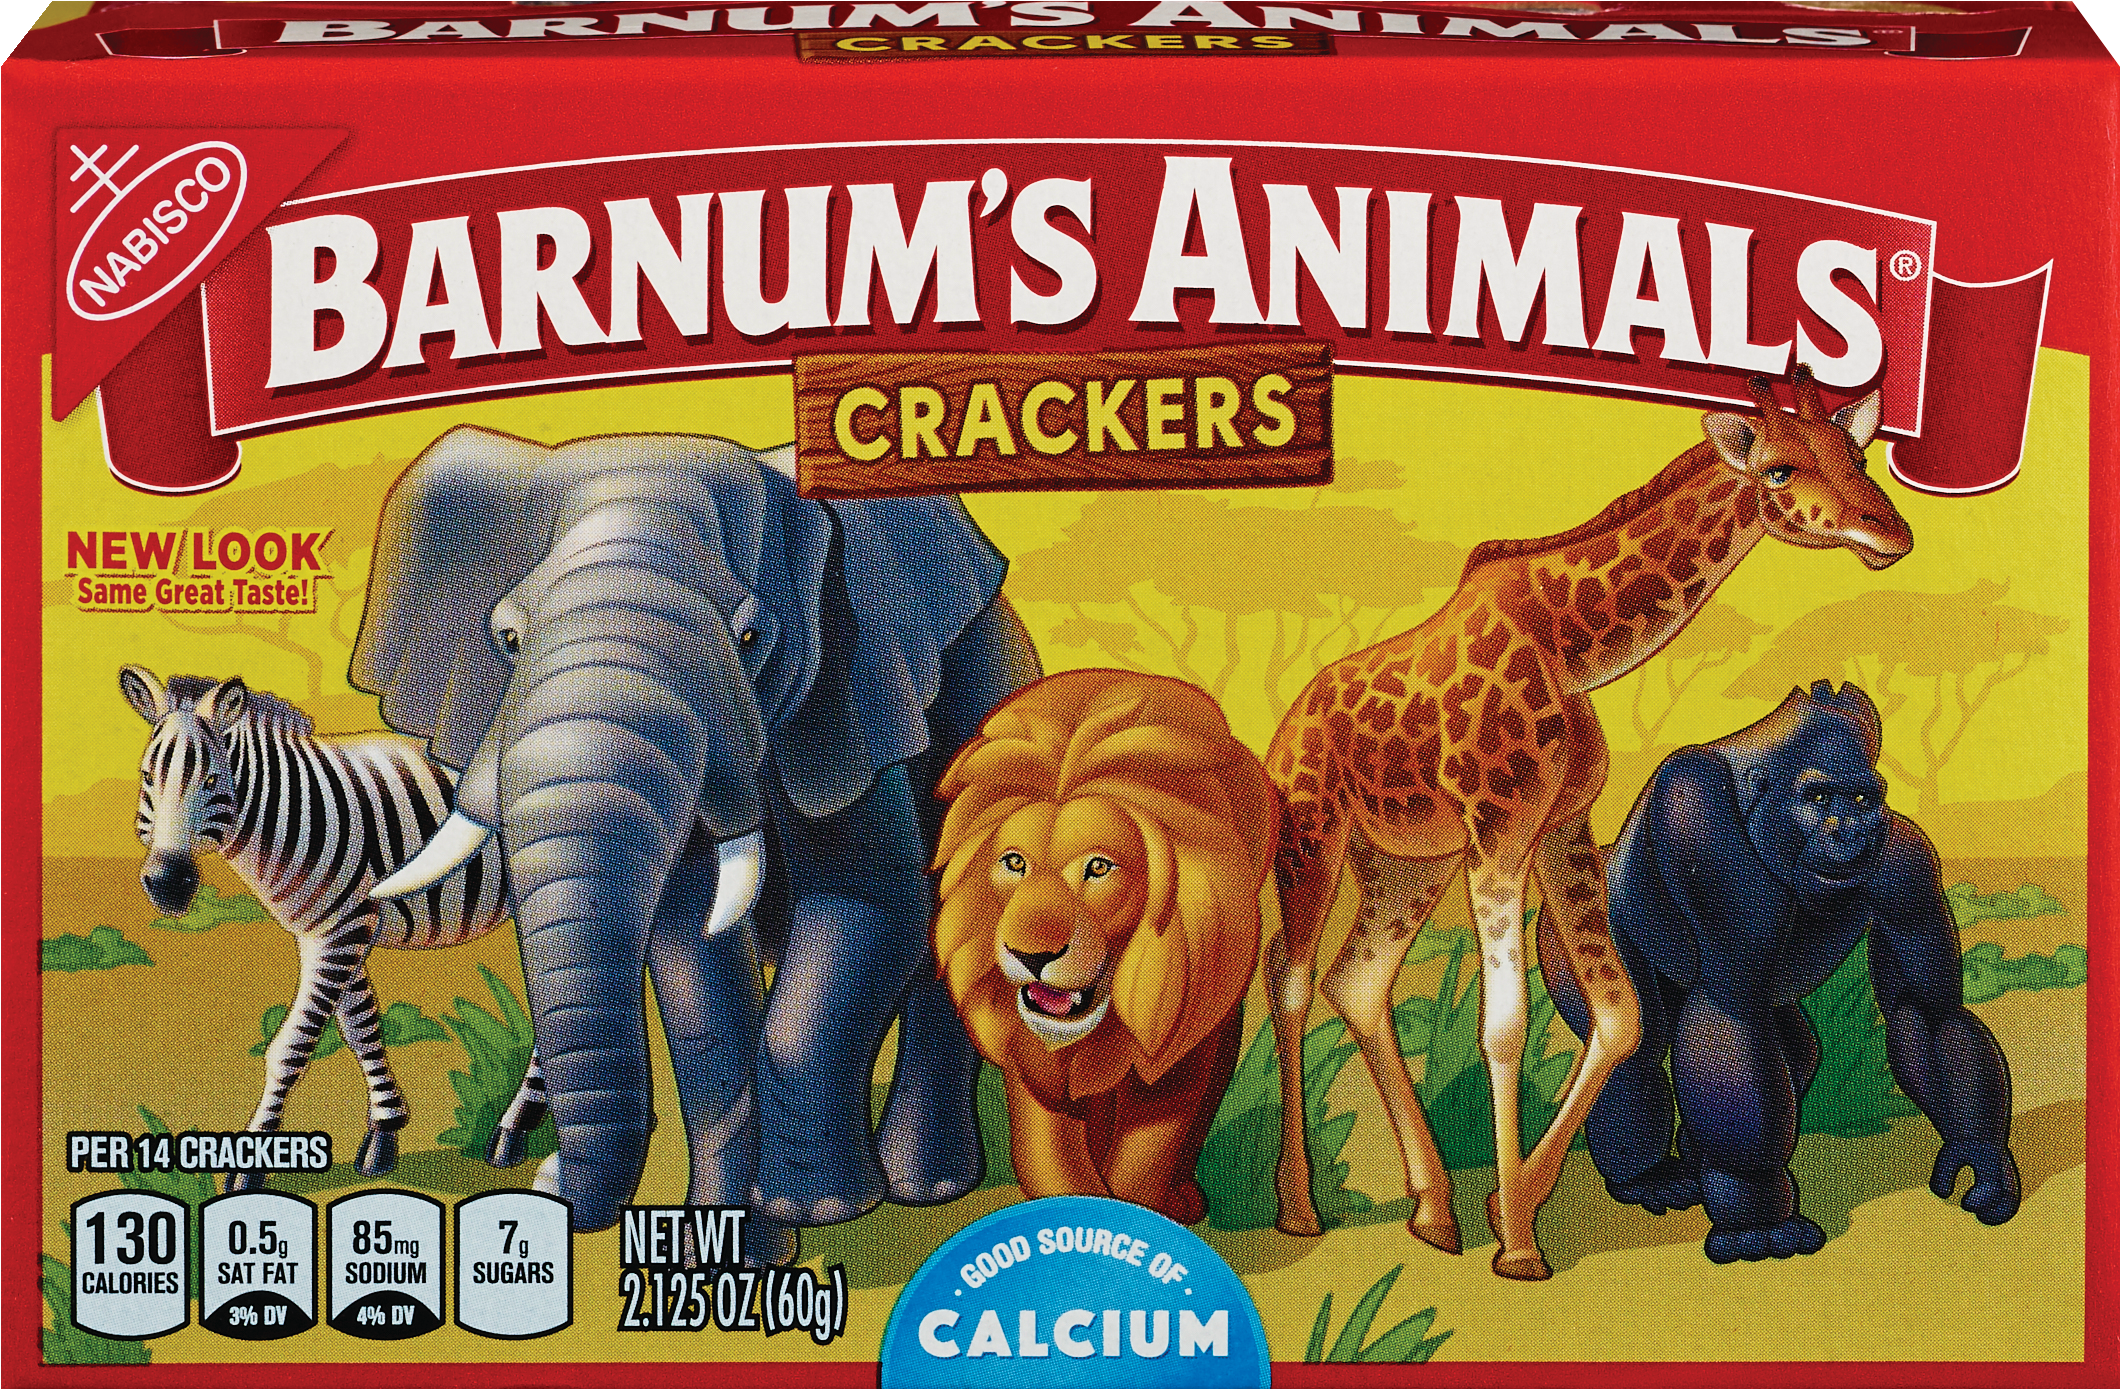 Barnum's Animals - Galletas saladas, 2.125 oz